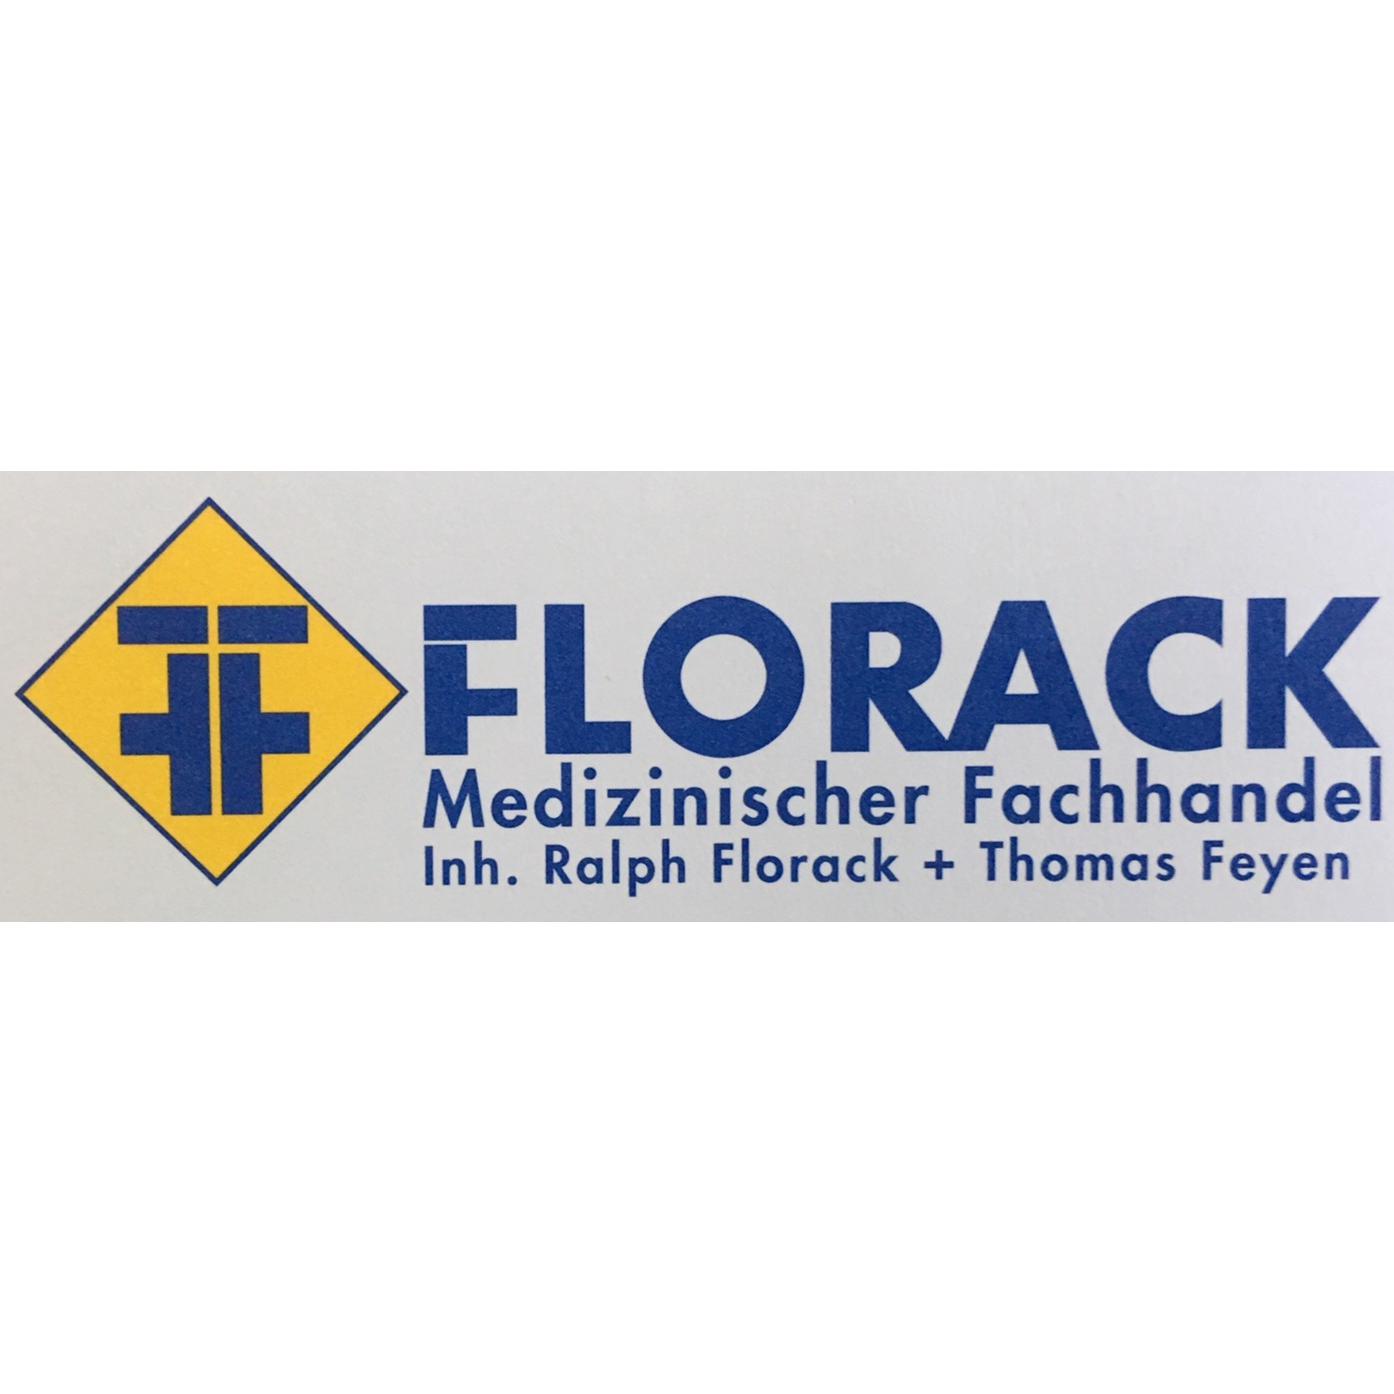 FLORACK Medizinischer Fachhandel GbR in Mönchengladbach - Logo